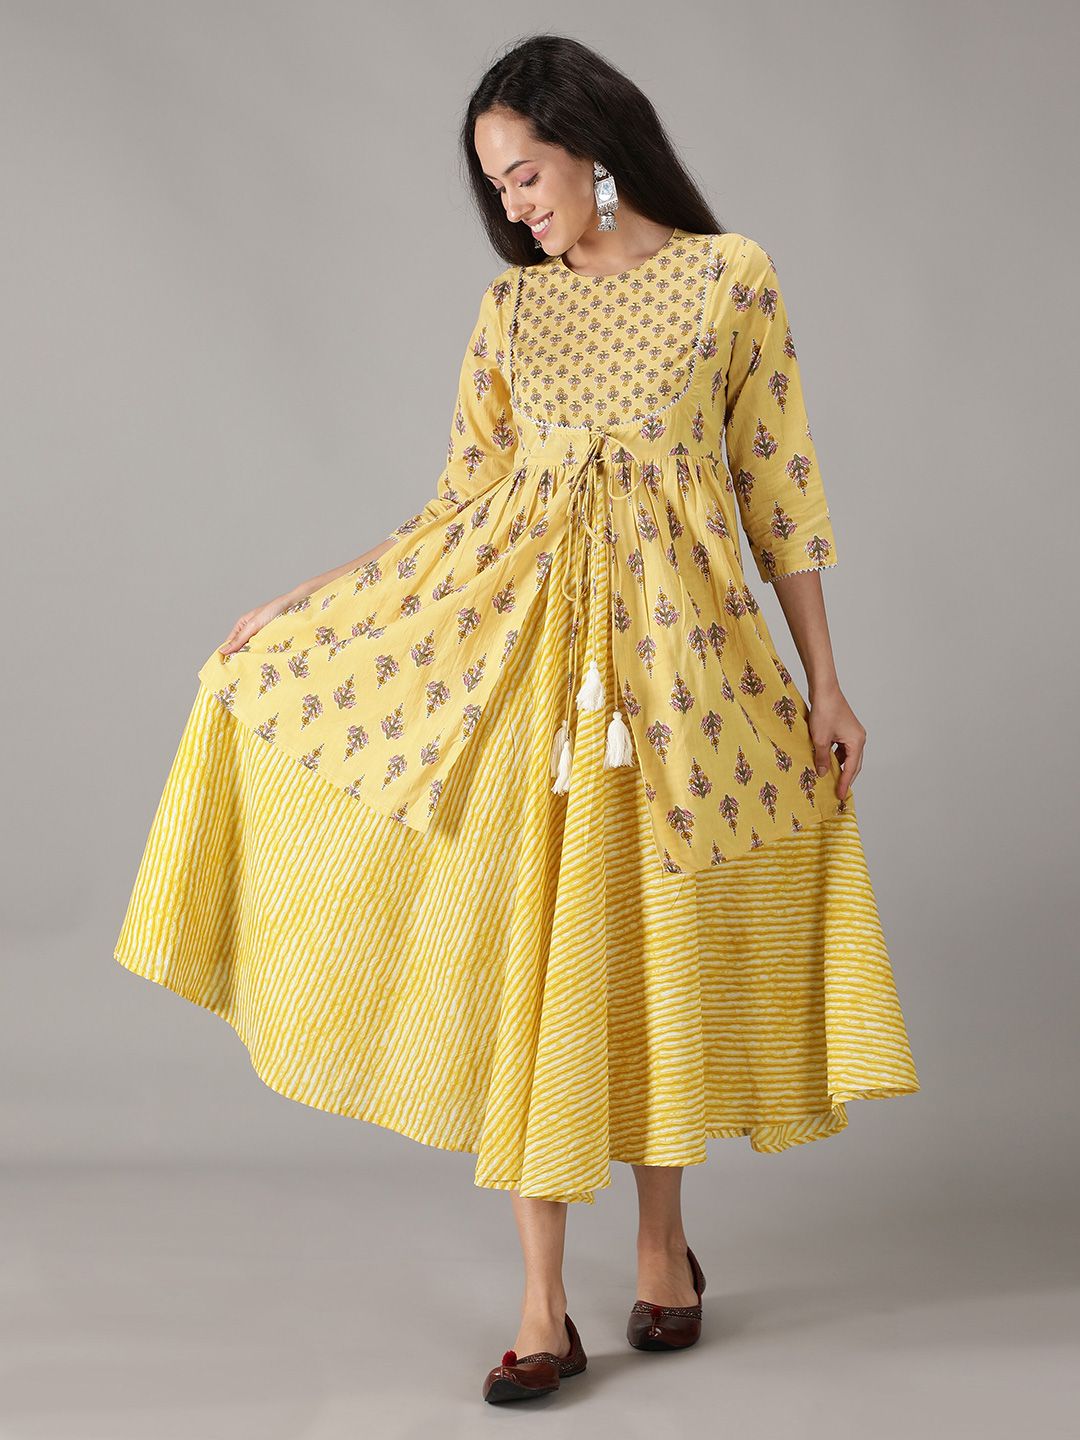 KASYA Ethnic Motifs Print Cotton A-Line Midi Dress Price in India